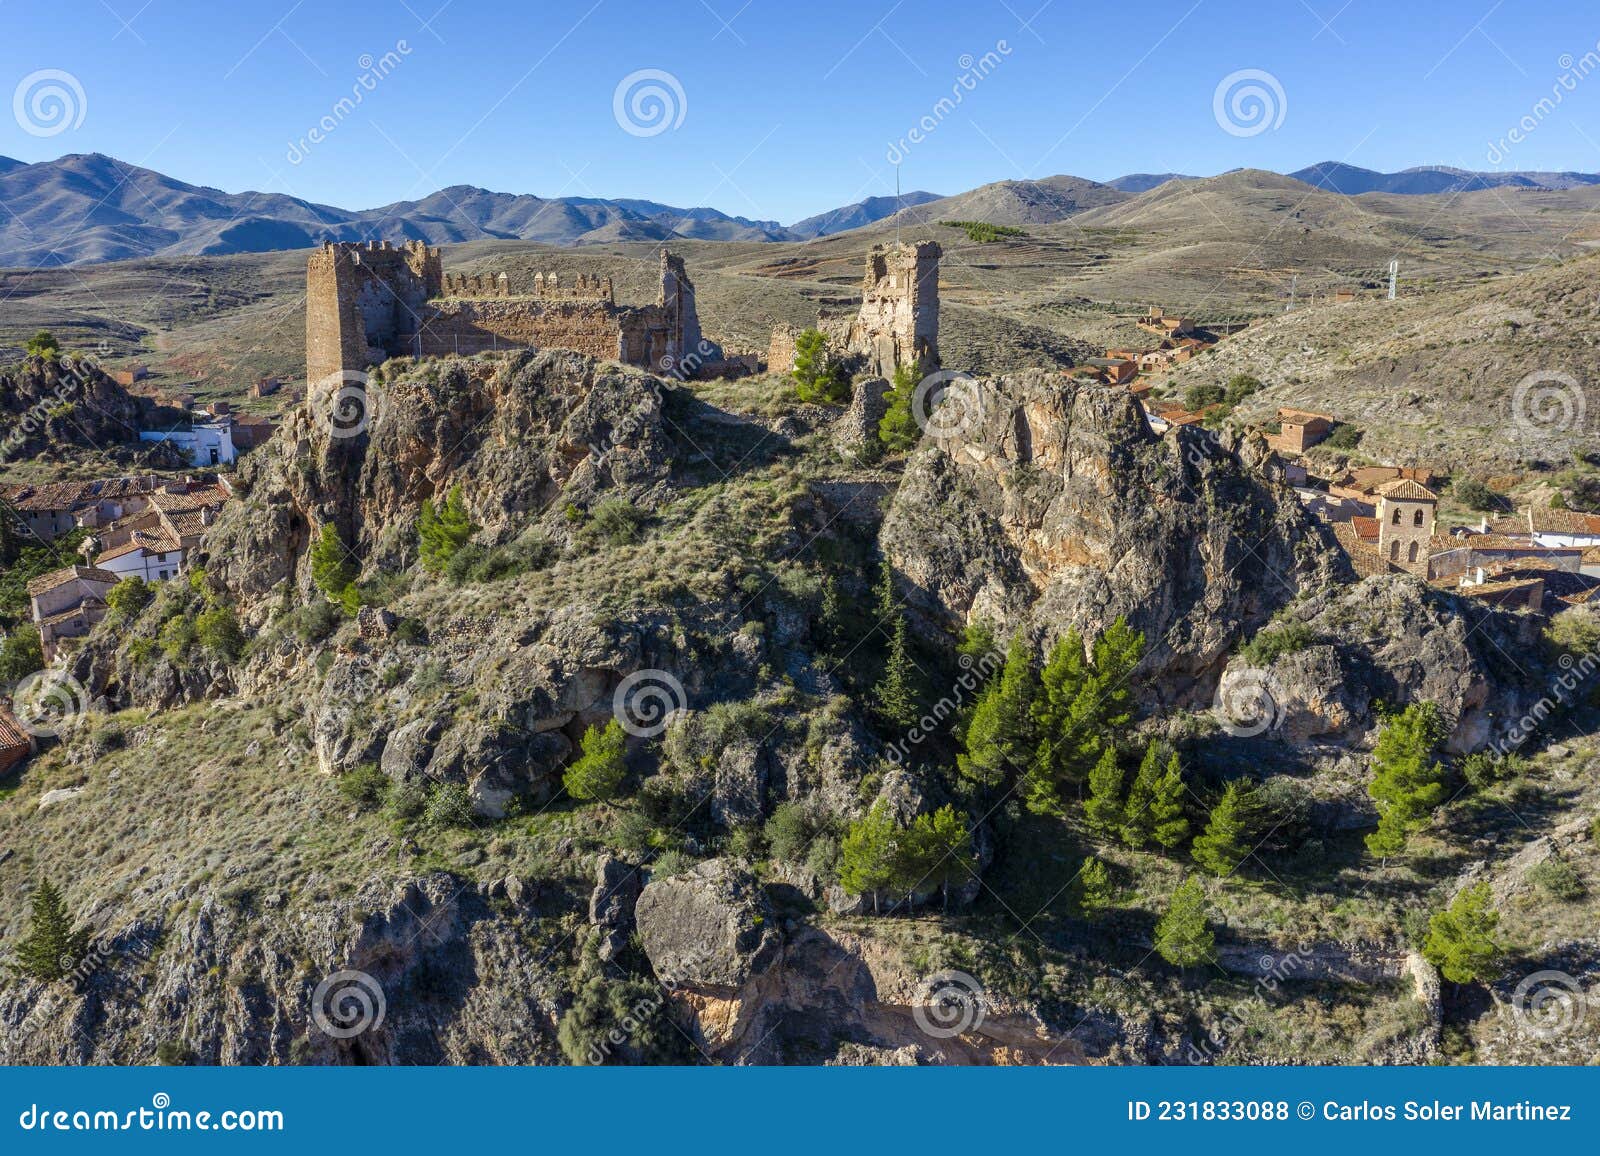 castle of arandiga, region of calatayud zaragoza spain